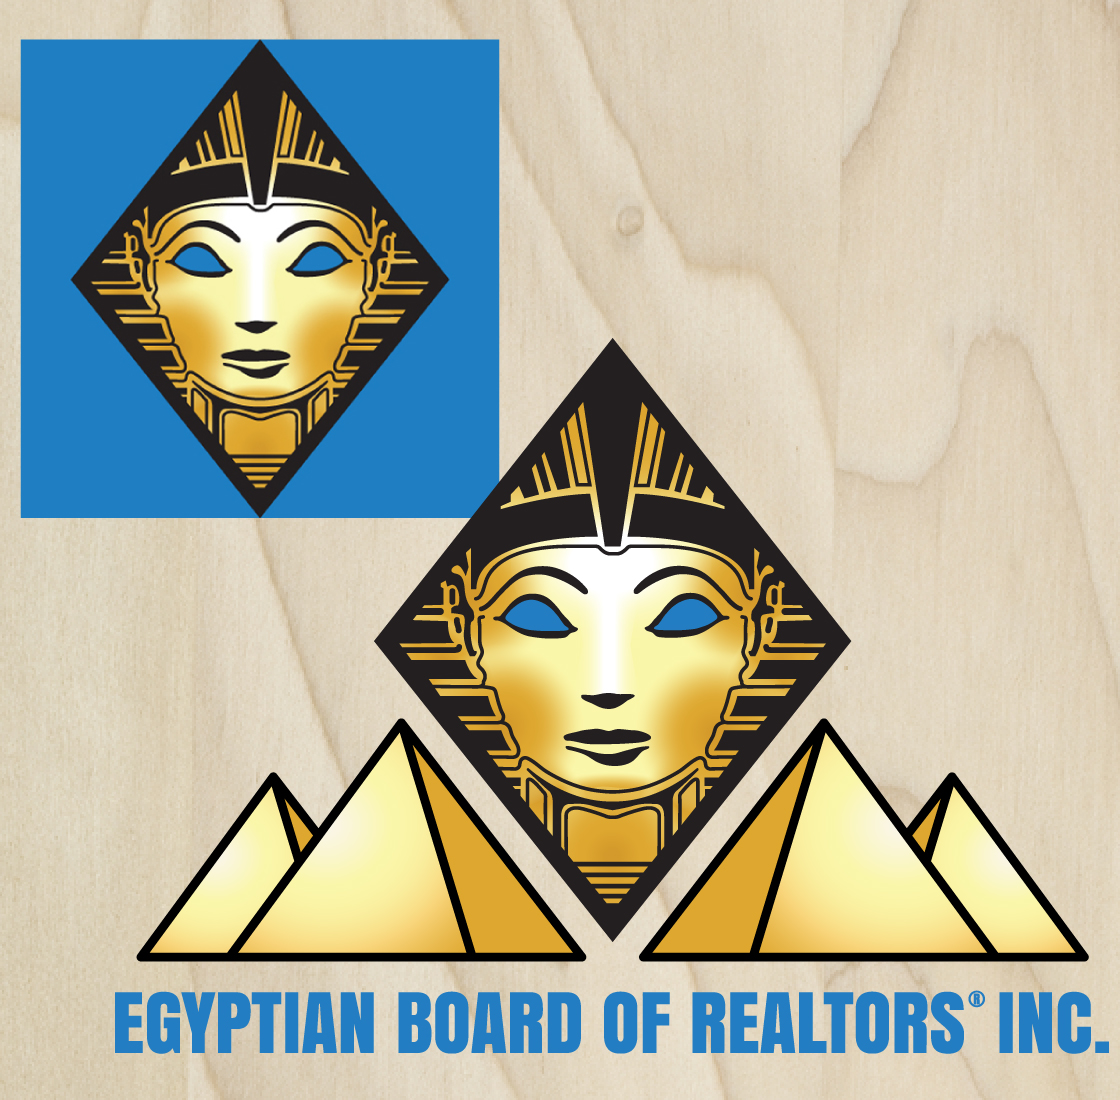 Corporate Identity - Egyptian Board of REALTORS